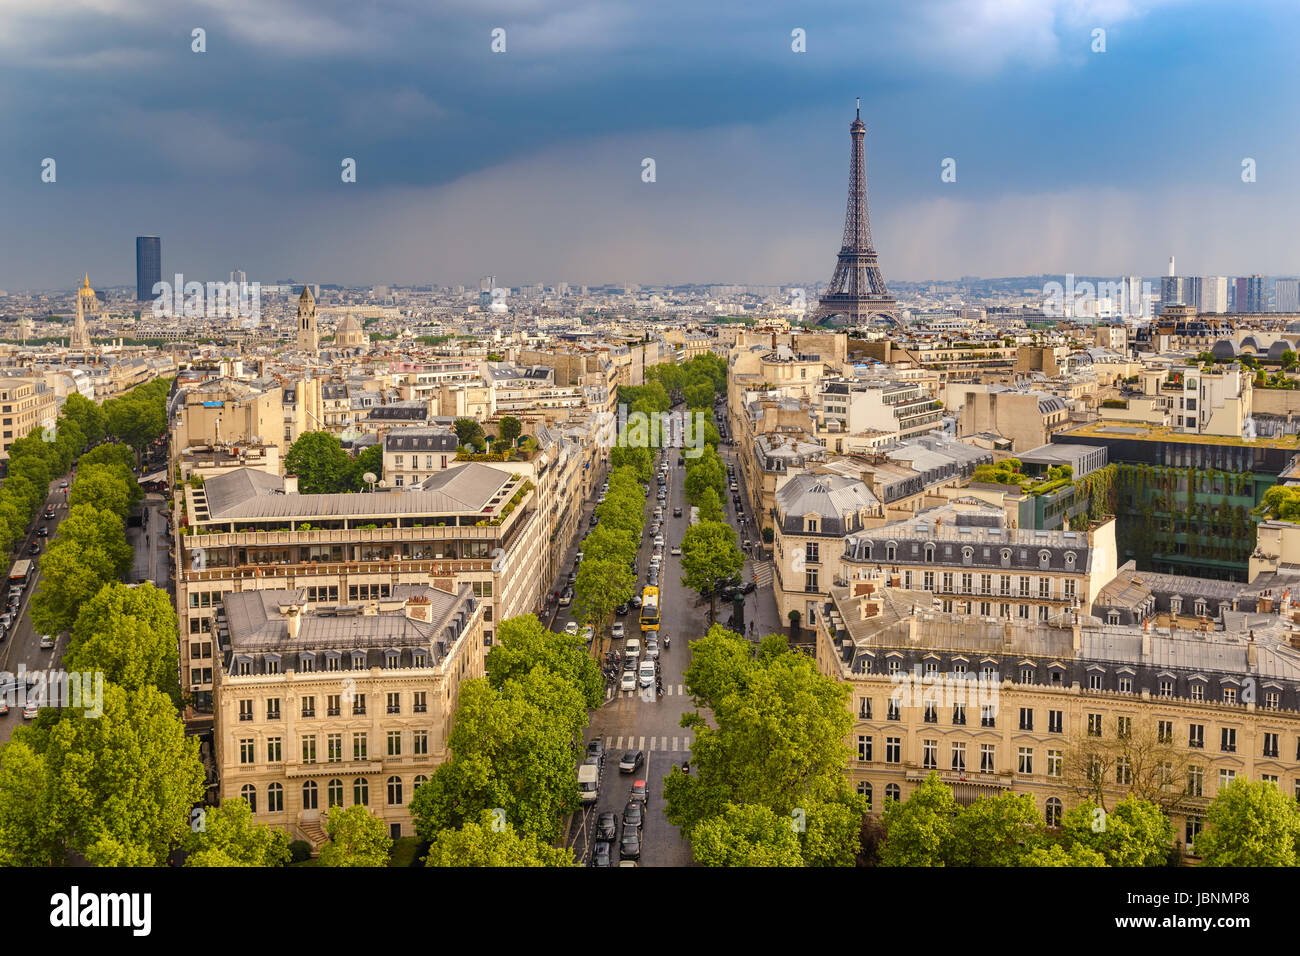 Paris city skyline view from Arc de Triomphe with Eiffel Tower, Paris, France Stock Photo